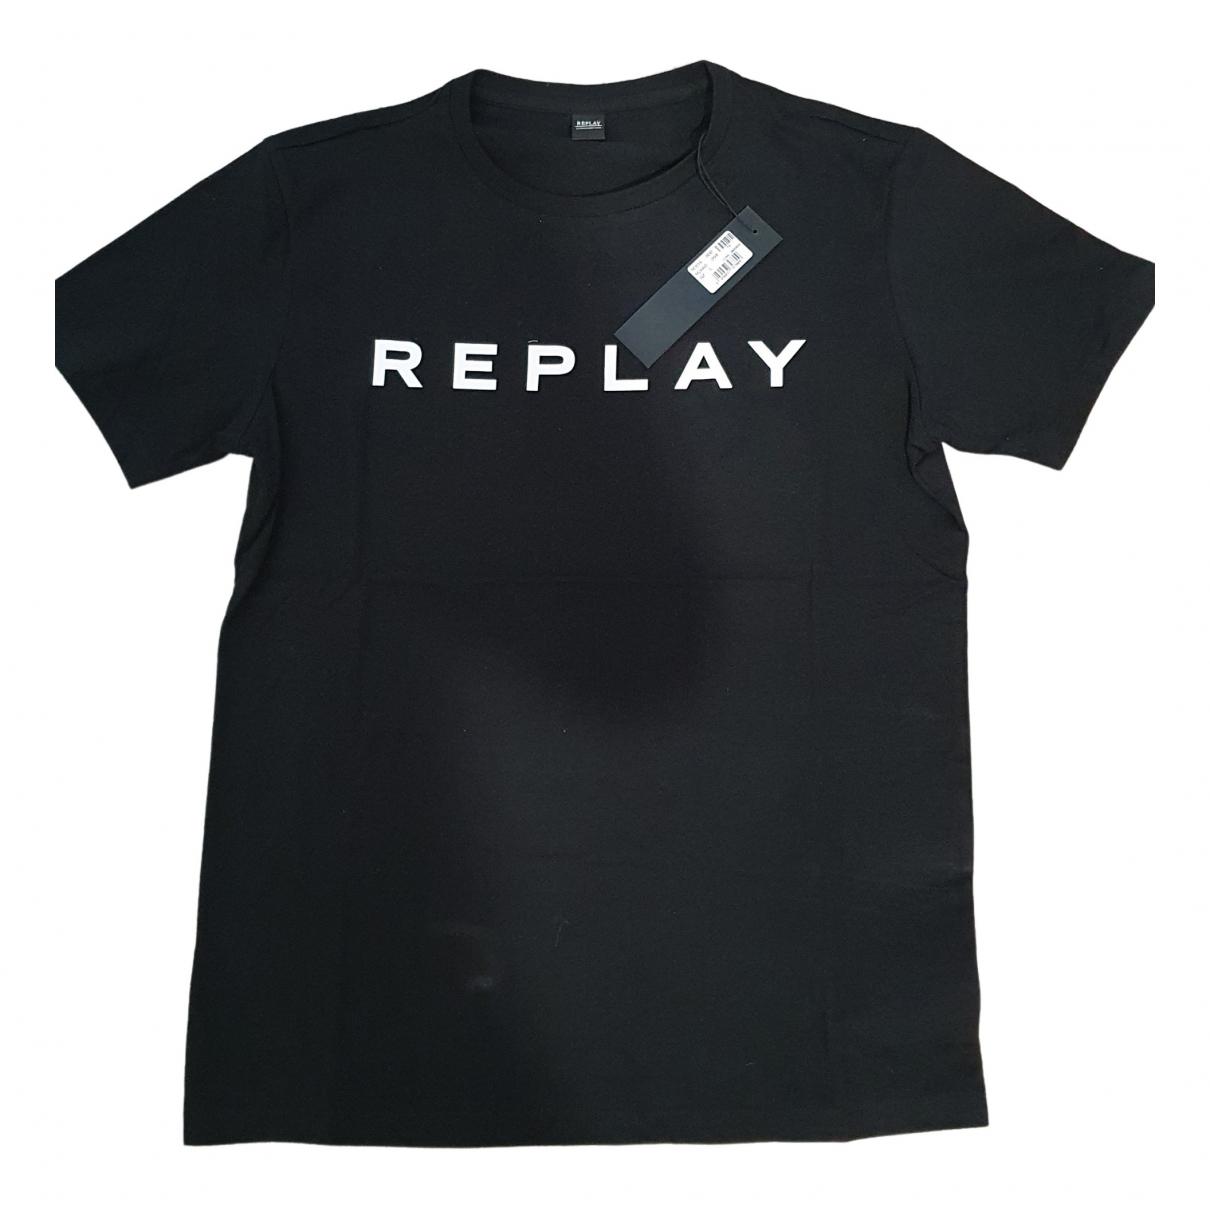 Cotton - Replay size 20499988 in T-shirt International XS Black